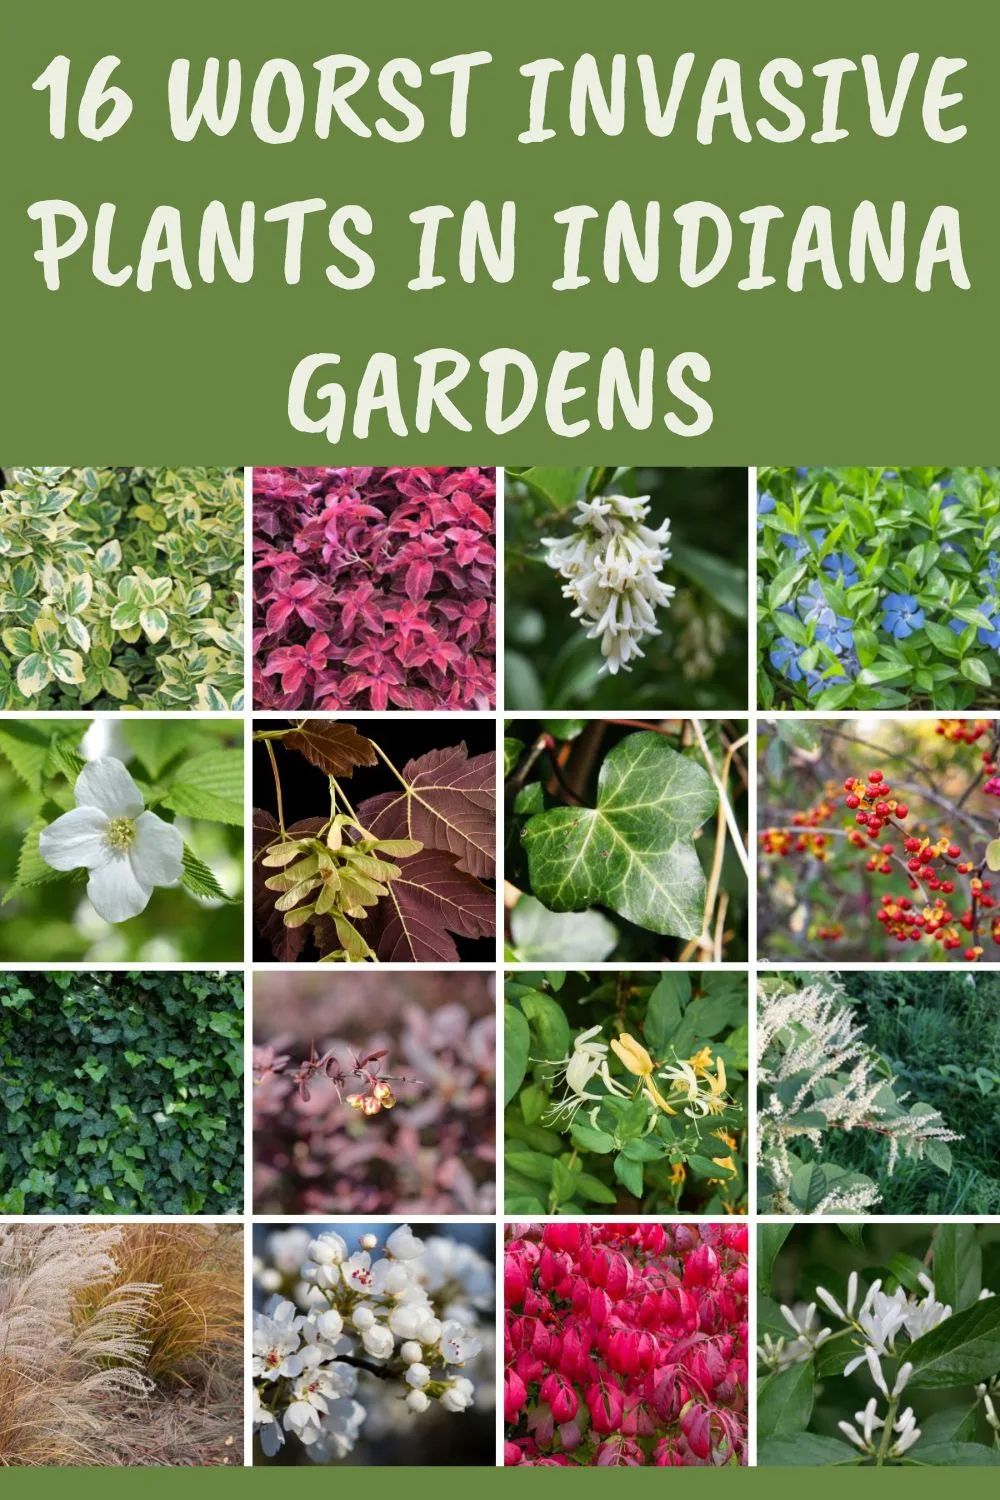 16 Worst Invasive Plants in Indiana Gardens